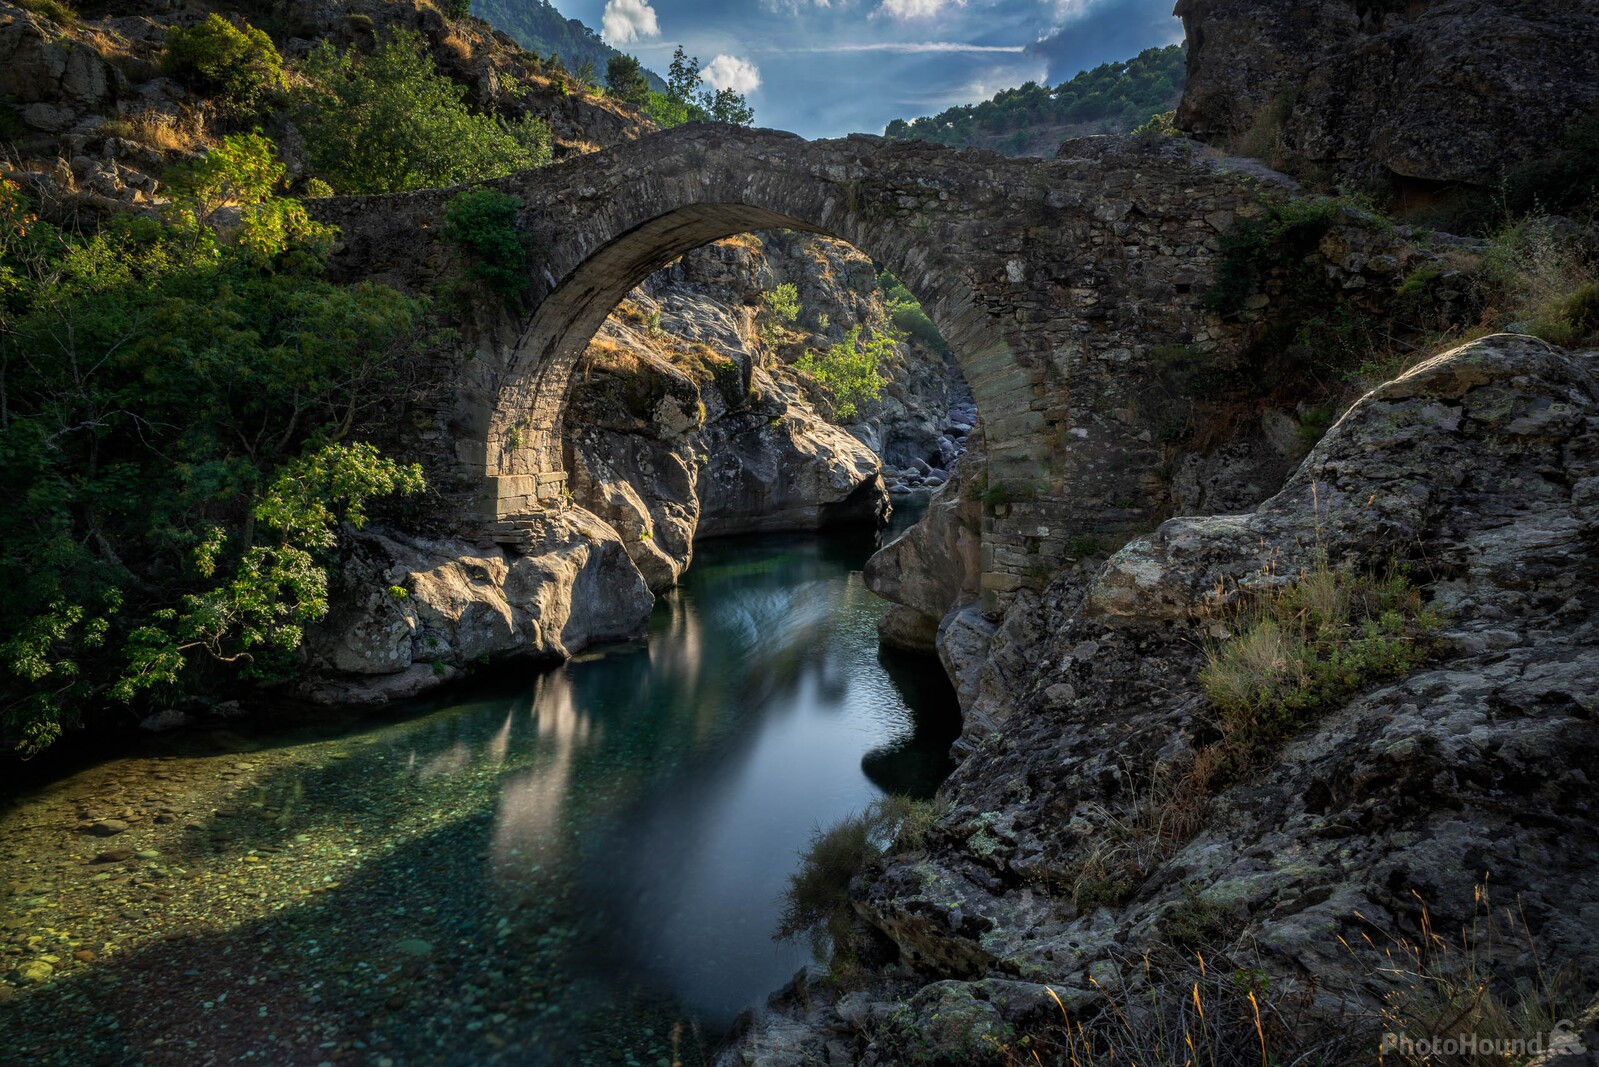 Image of Asco - The Genoise Bridge by Raimondo Giamberduca